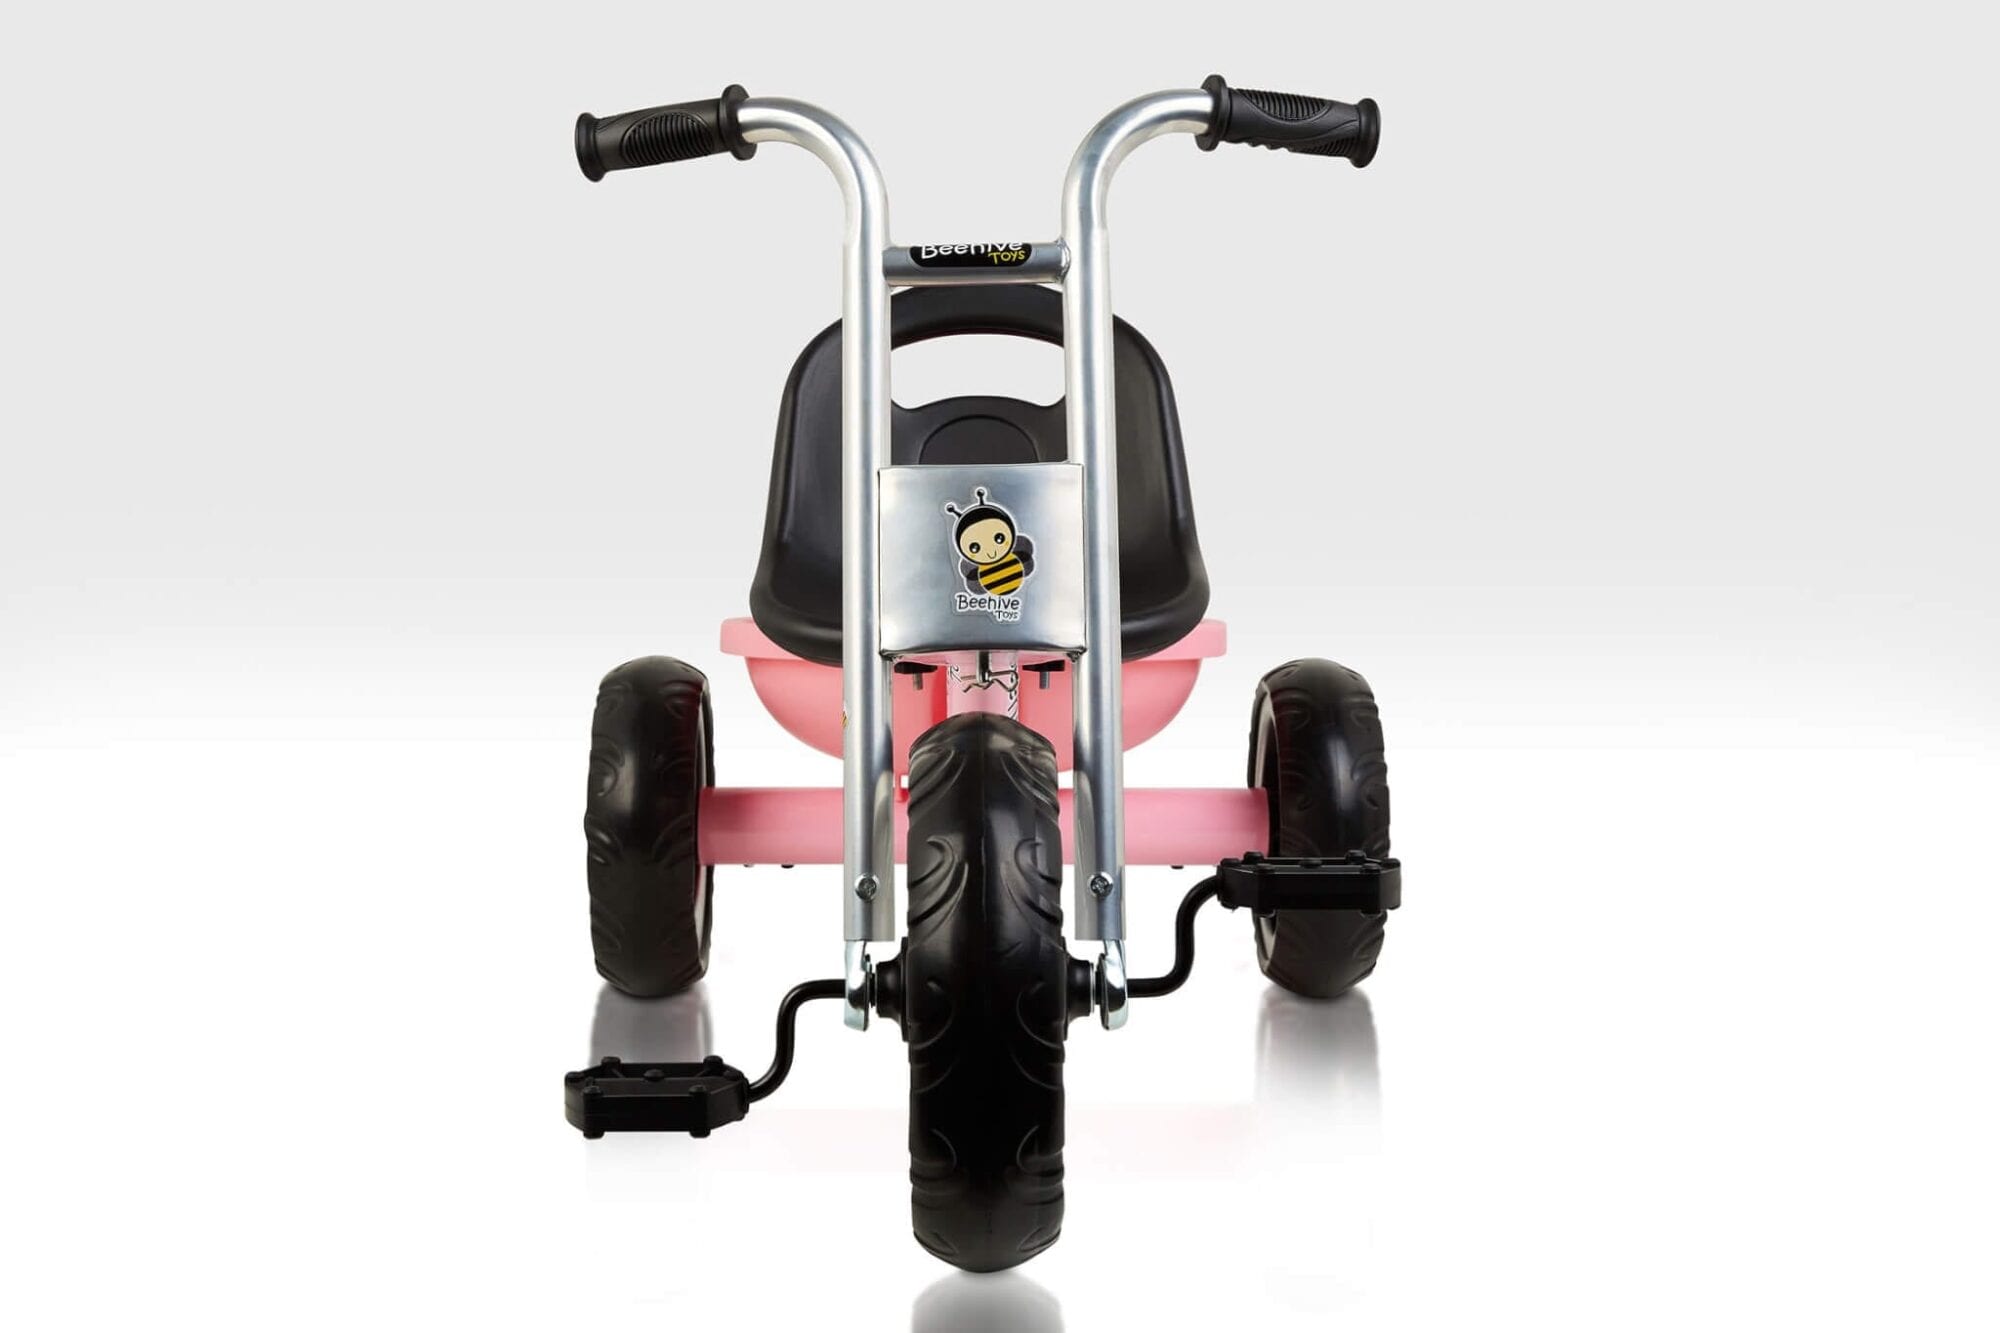 Pink Easy Rider Trike